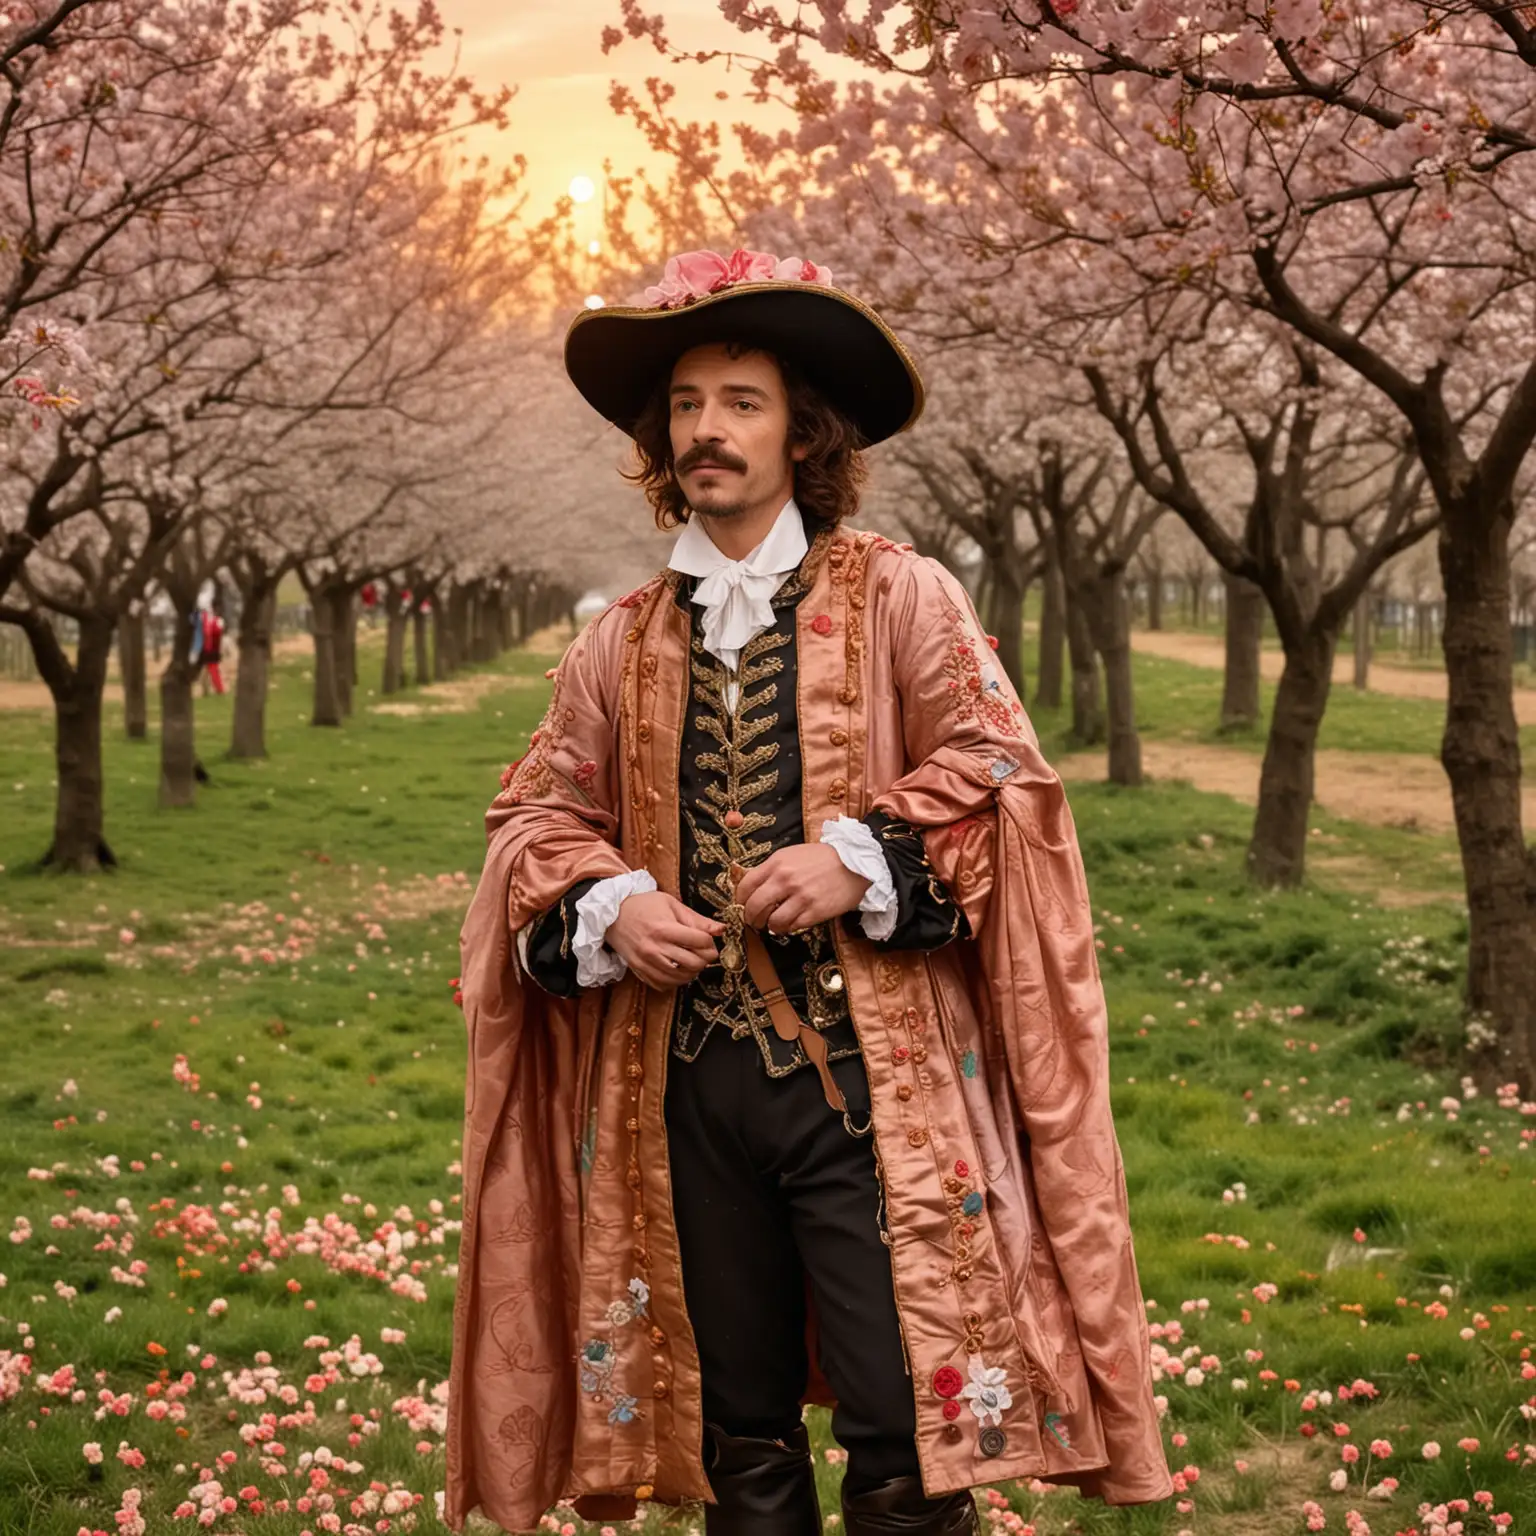 Romantic Sunset Pledge Cyrano de Bergerac in Cherry Blossom Orchard